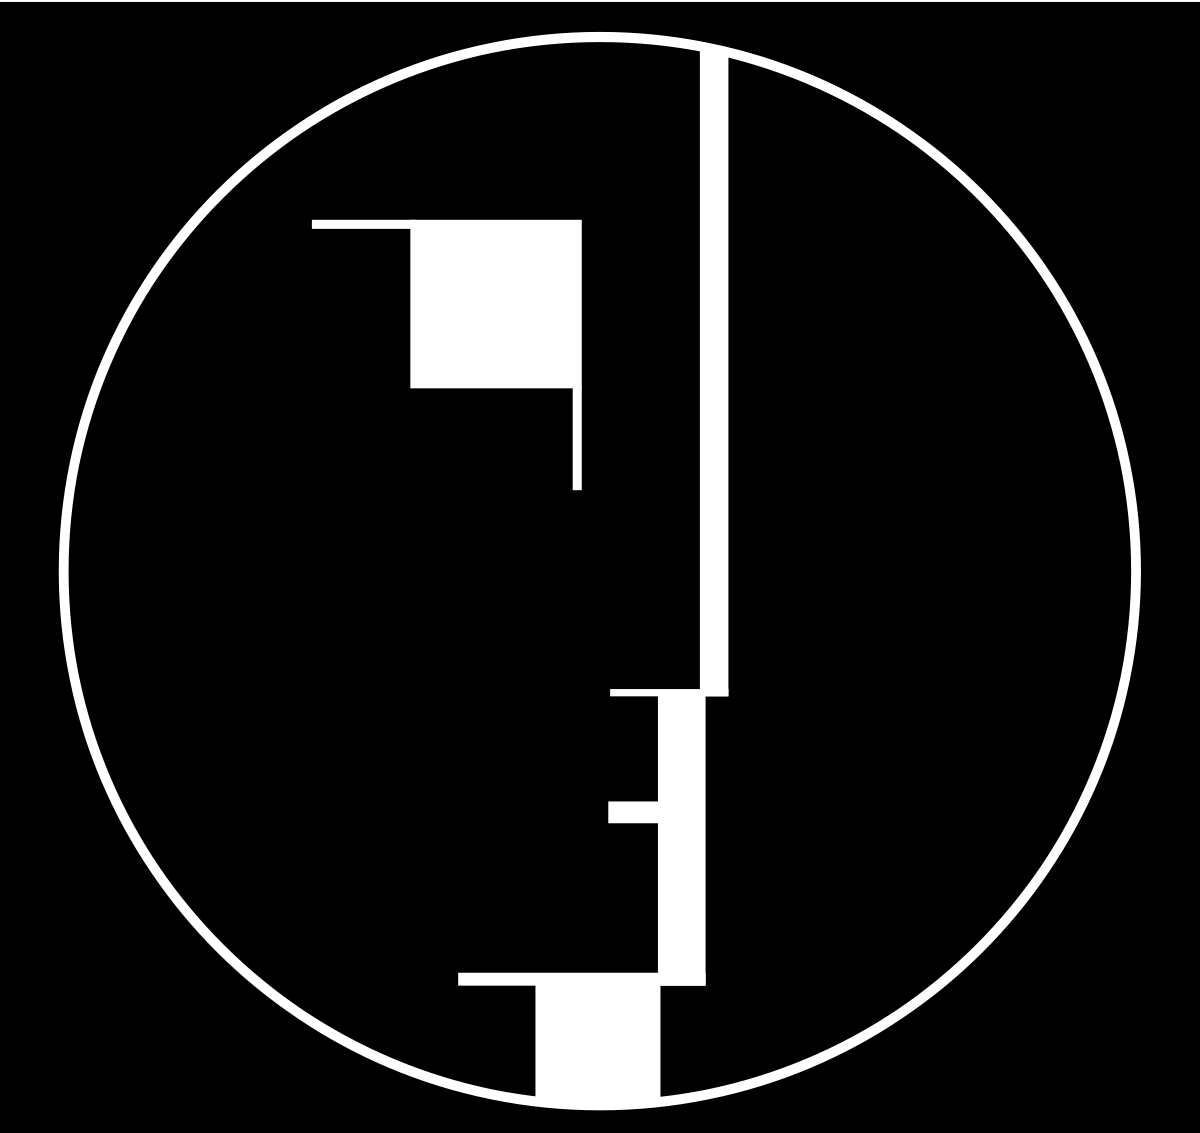 Bauhaus - Wikipedia
